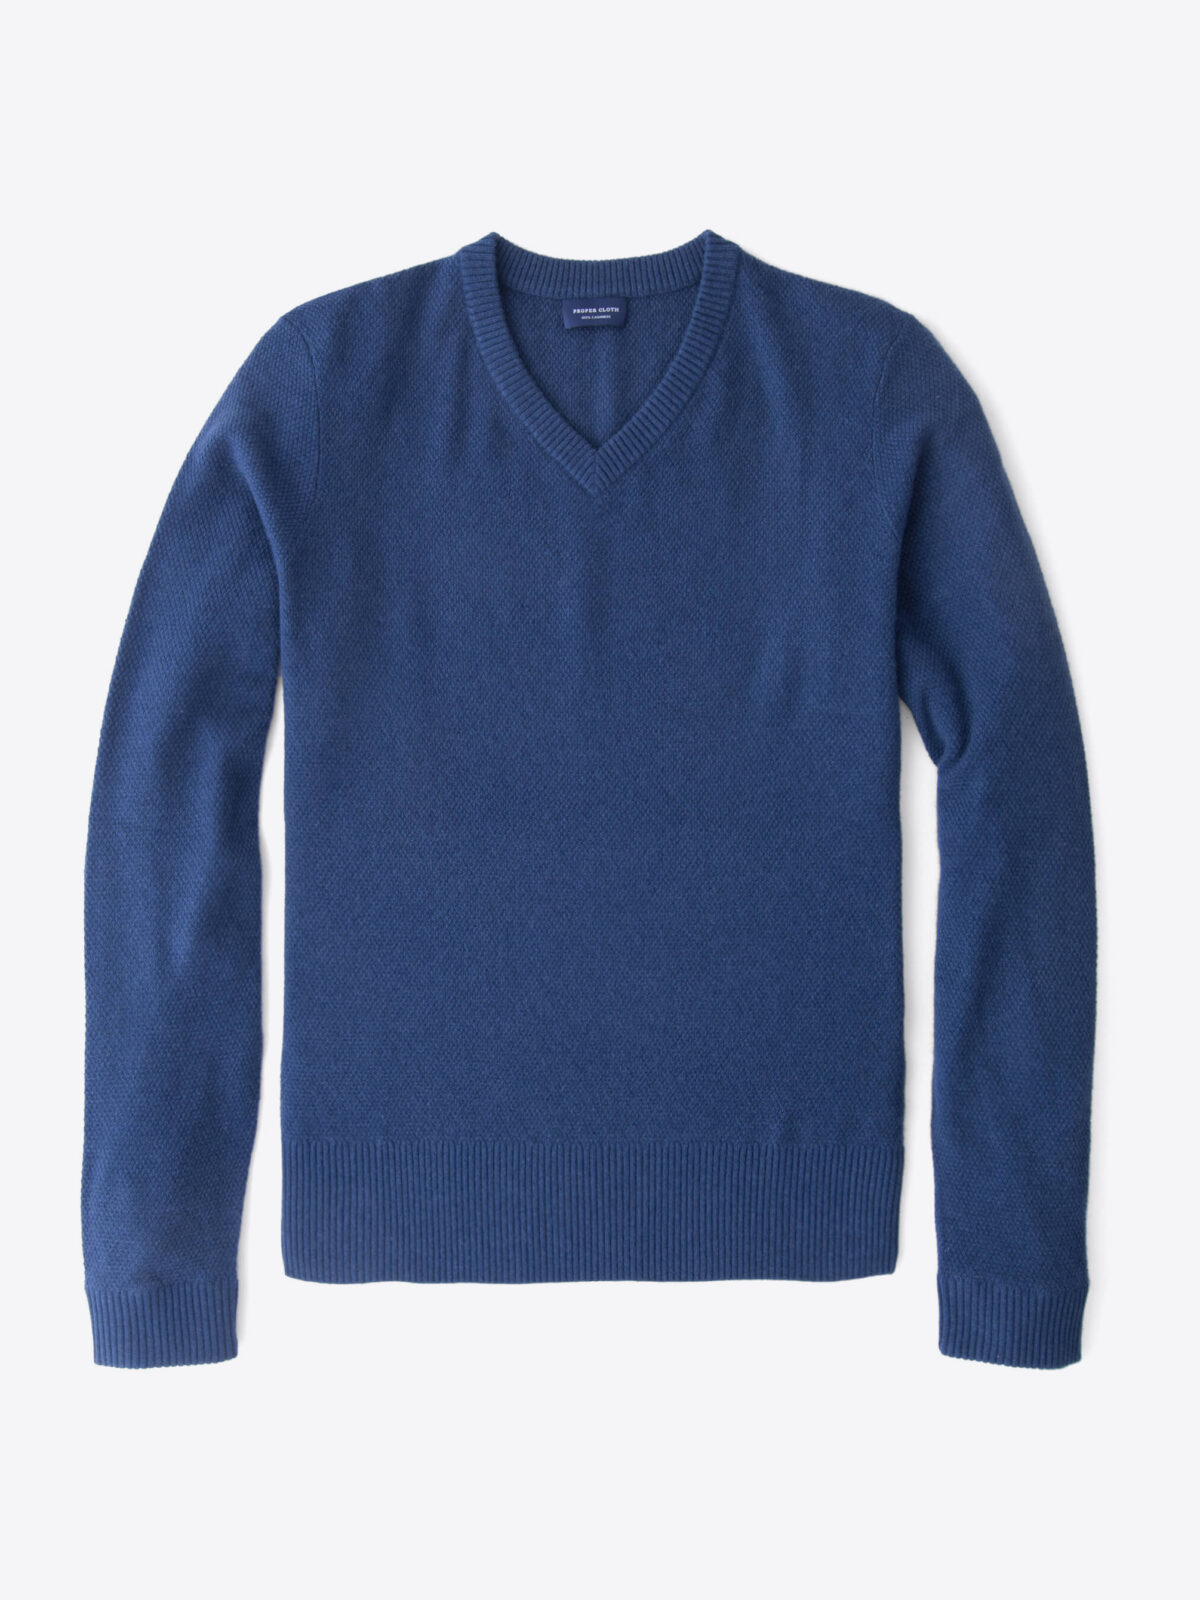 Ocean Blue Cobble Stitch Cashmere V-Neck Sweater